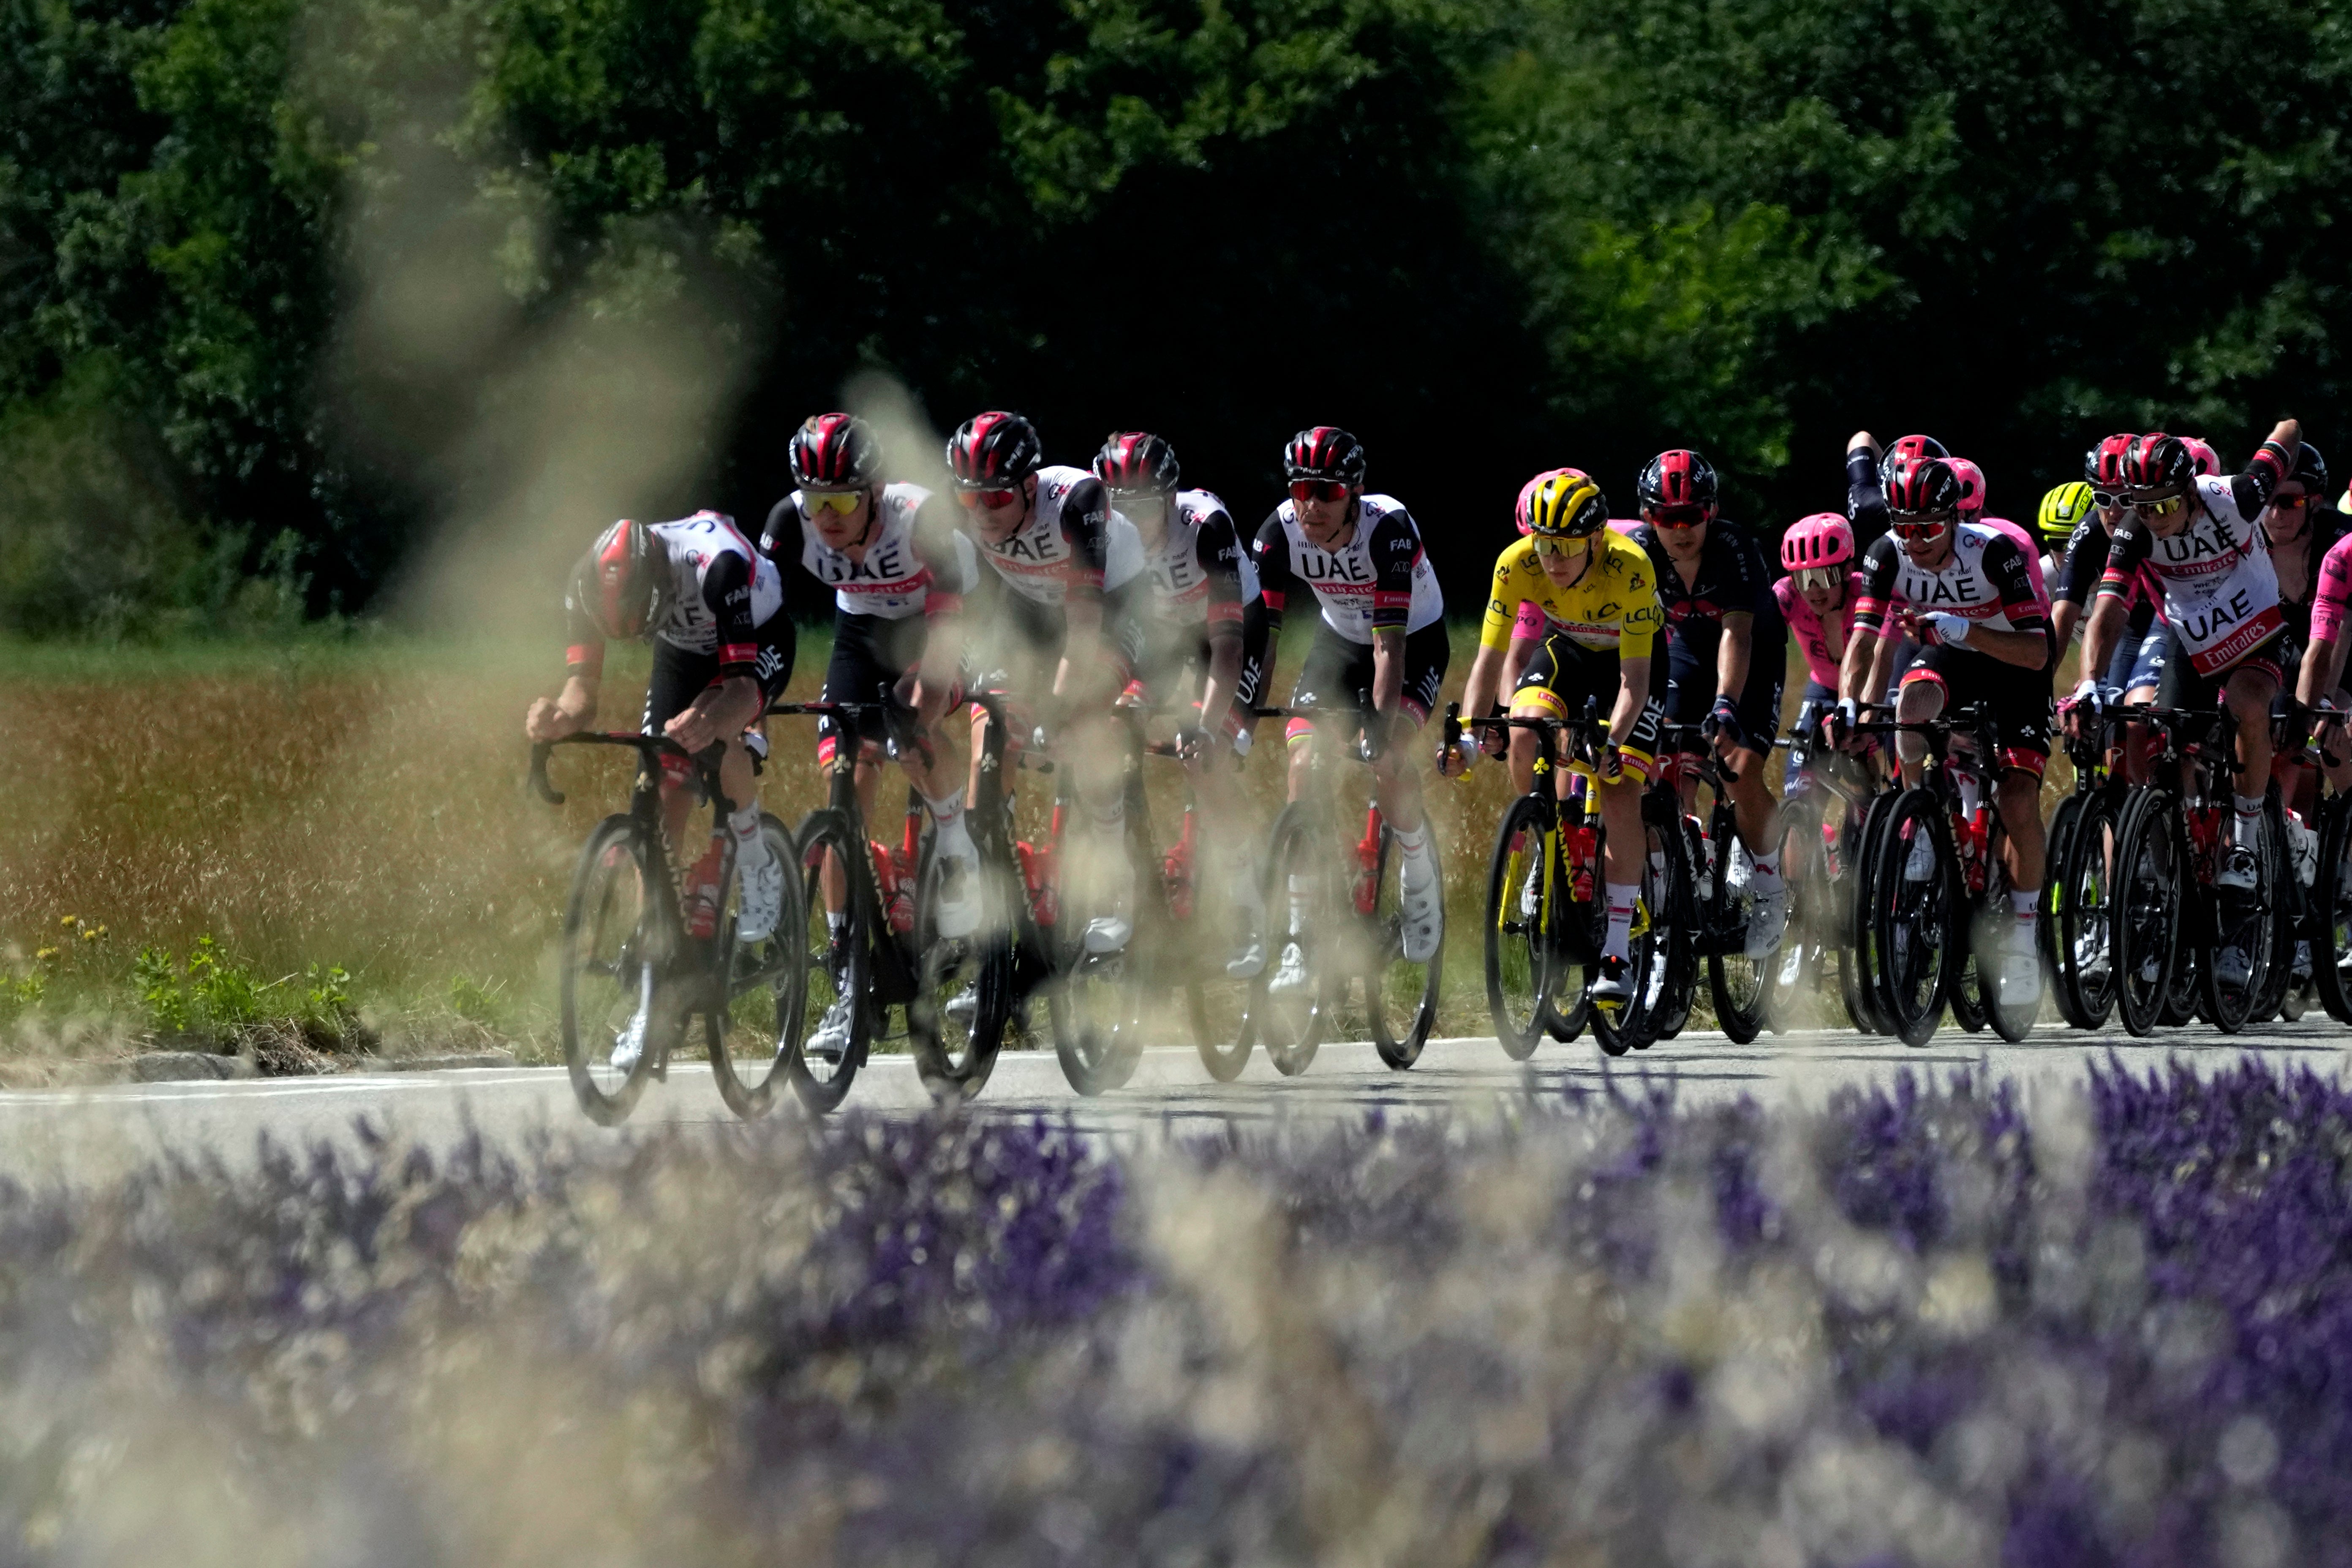 The Tour de France peloton takes to the Danish coastline